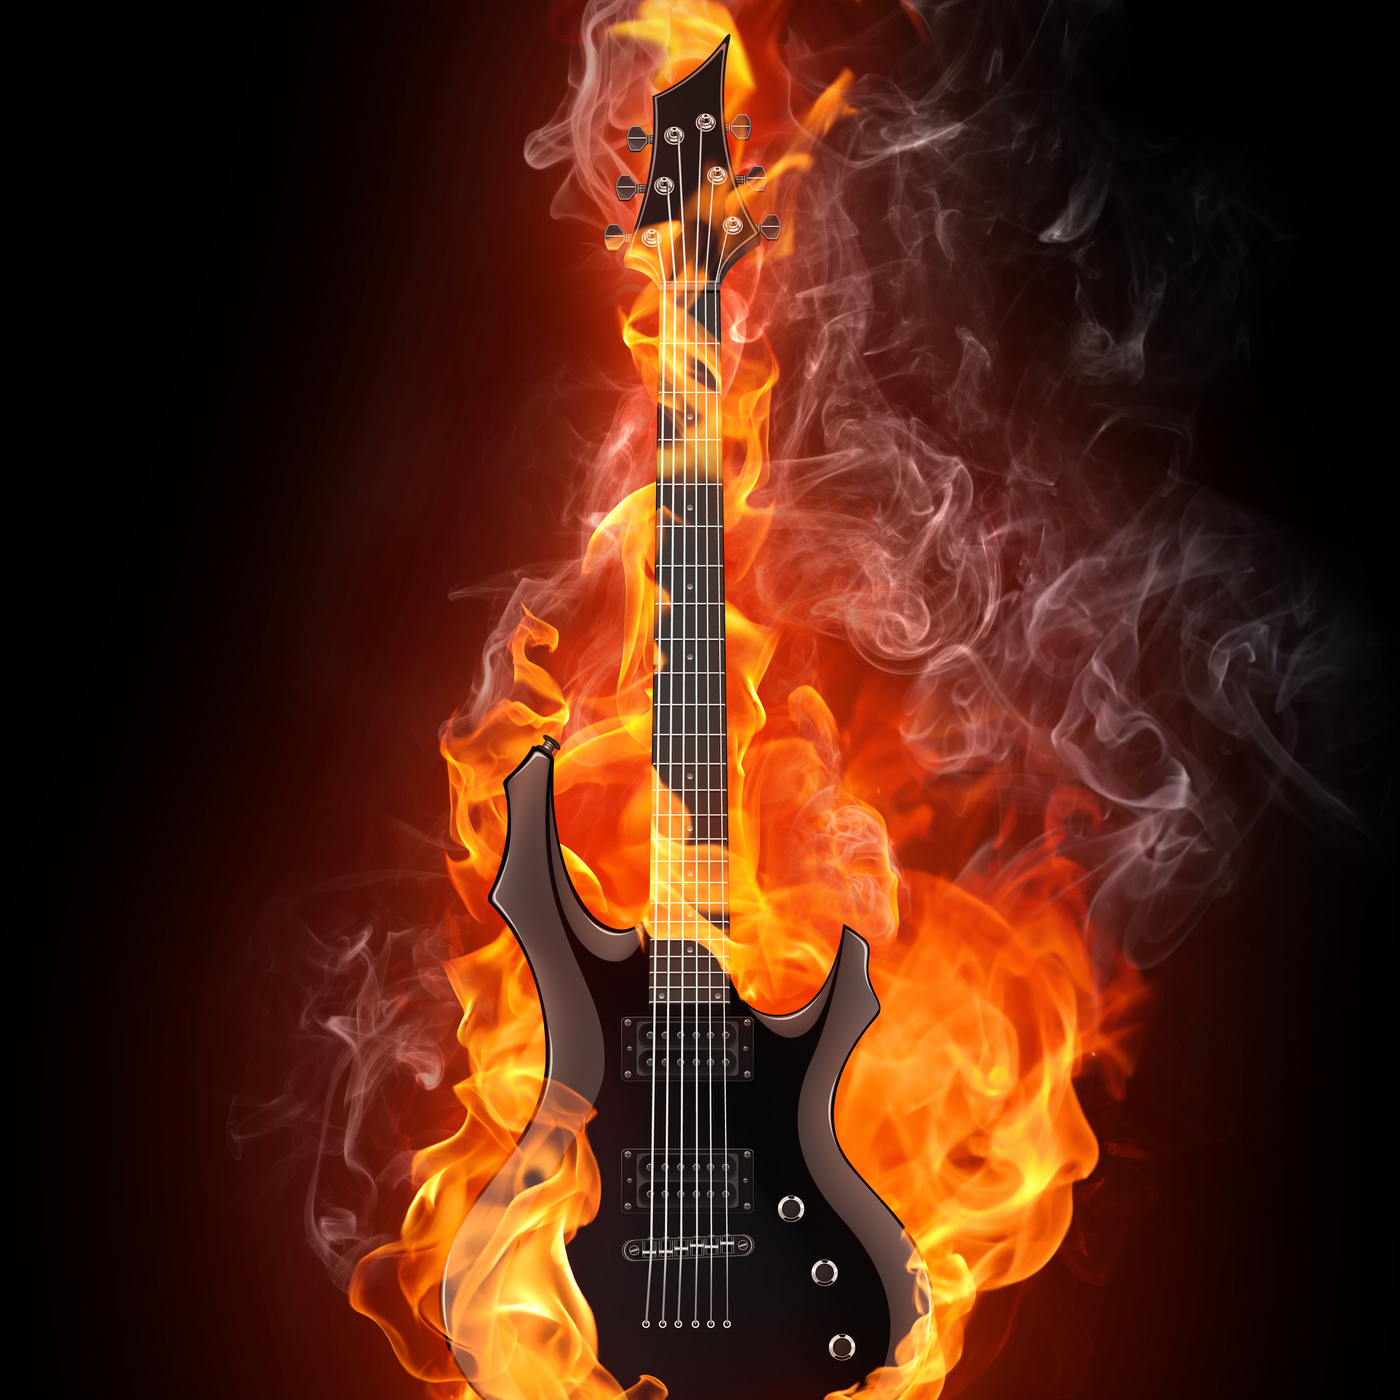 Музыка на телефон гитара. Рок гитара. Электрогитара пламя. Гитара в огне фон. Электрогитара на фоне огня.